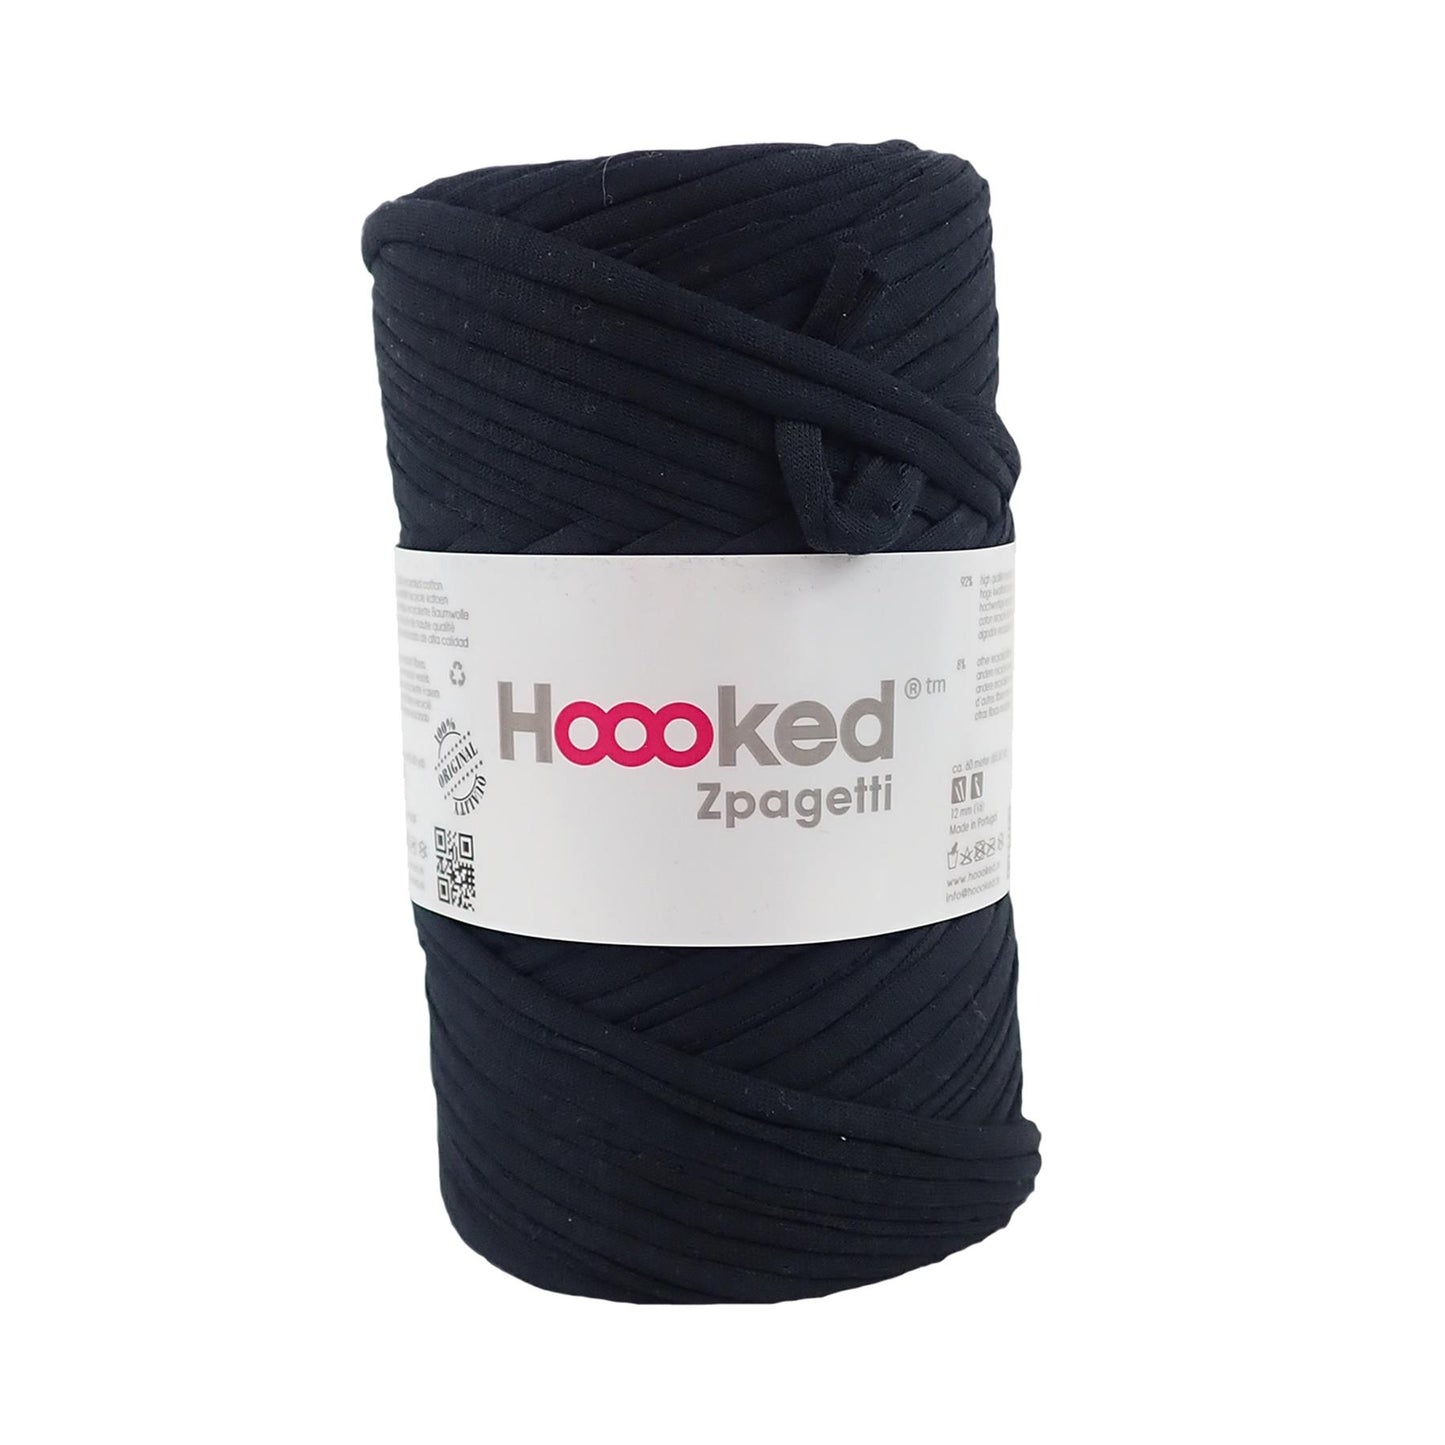 Hoooked Zpagetti Black Cotton T-Shirt Yarn - 60M 350g